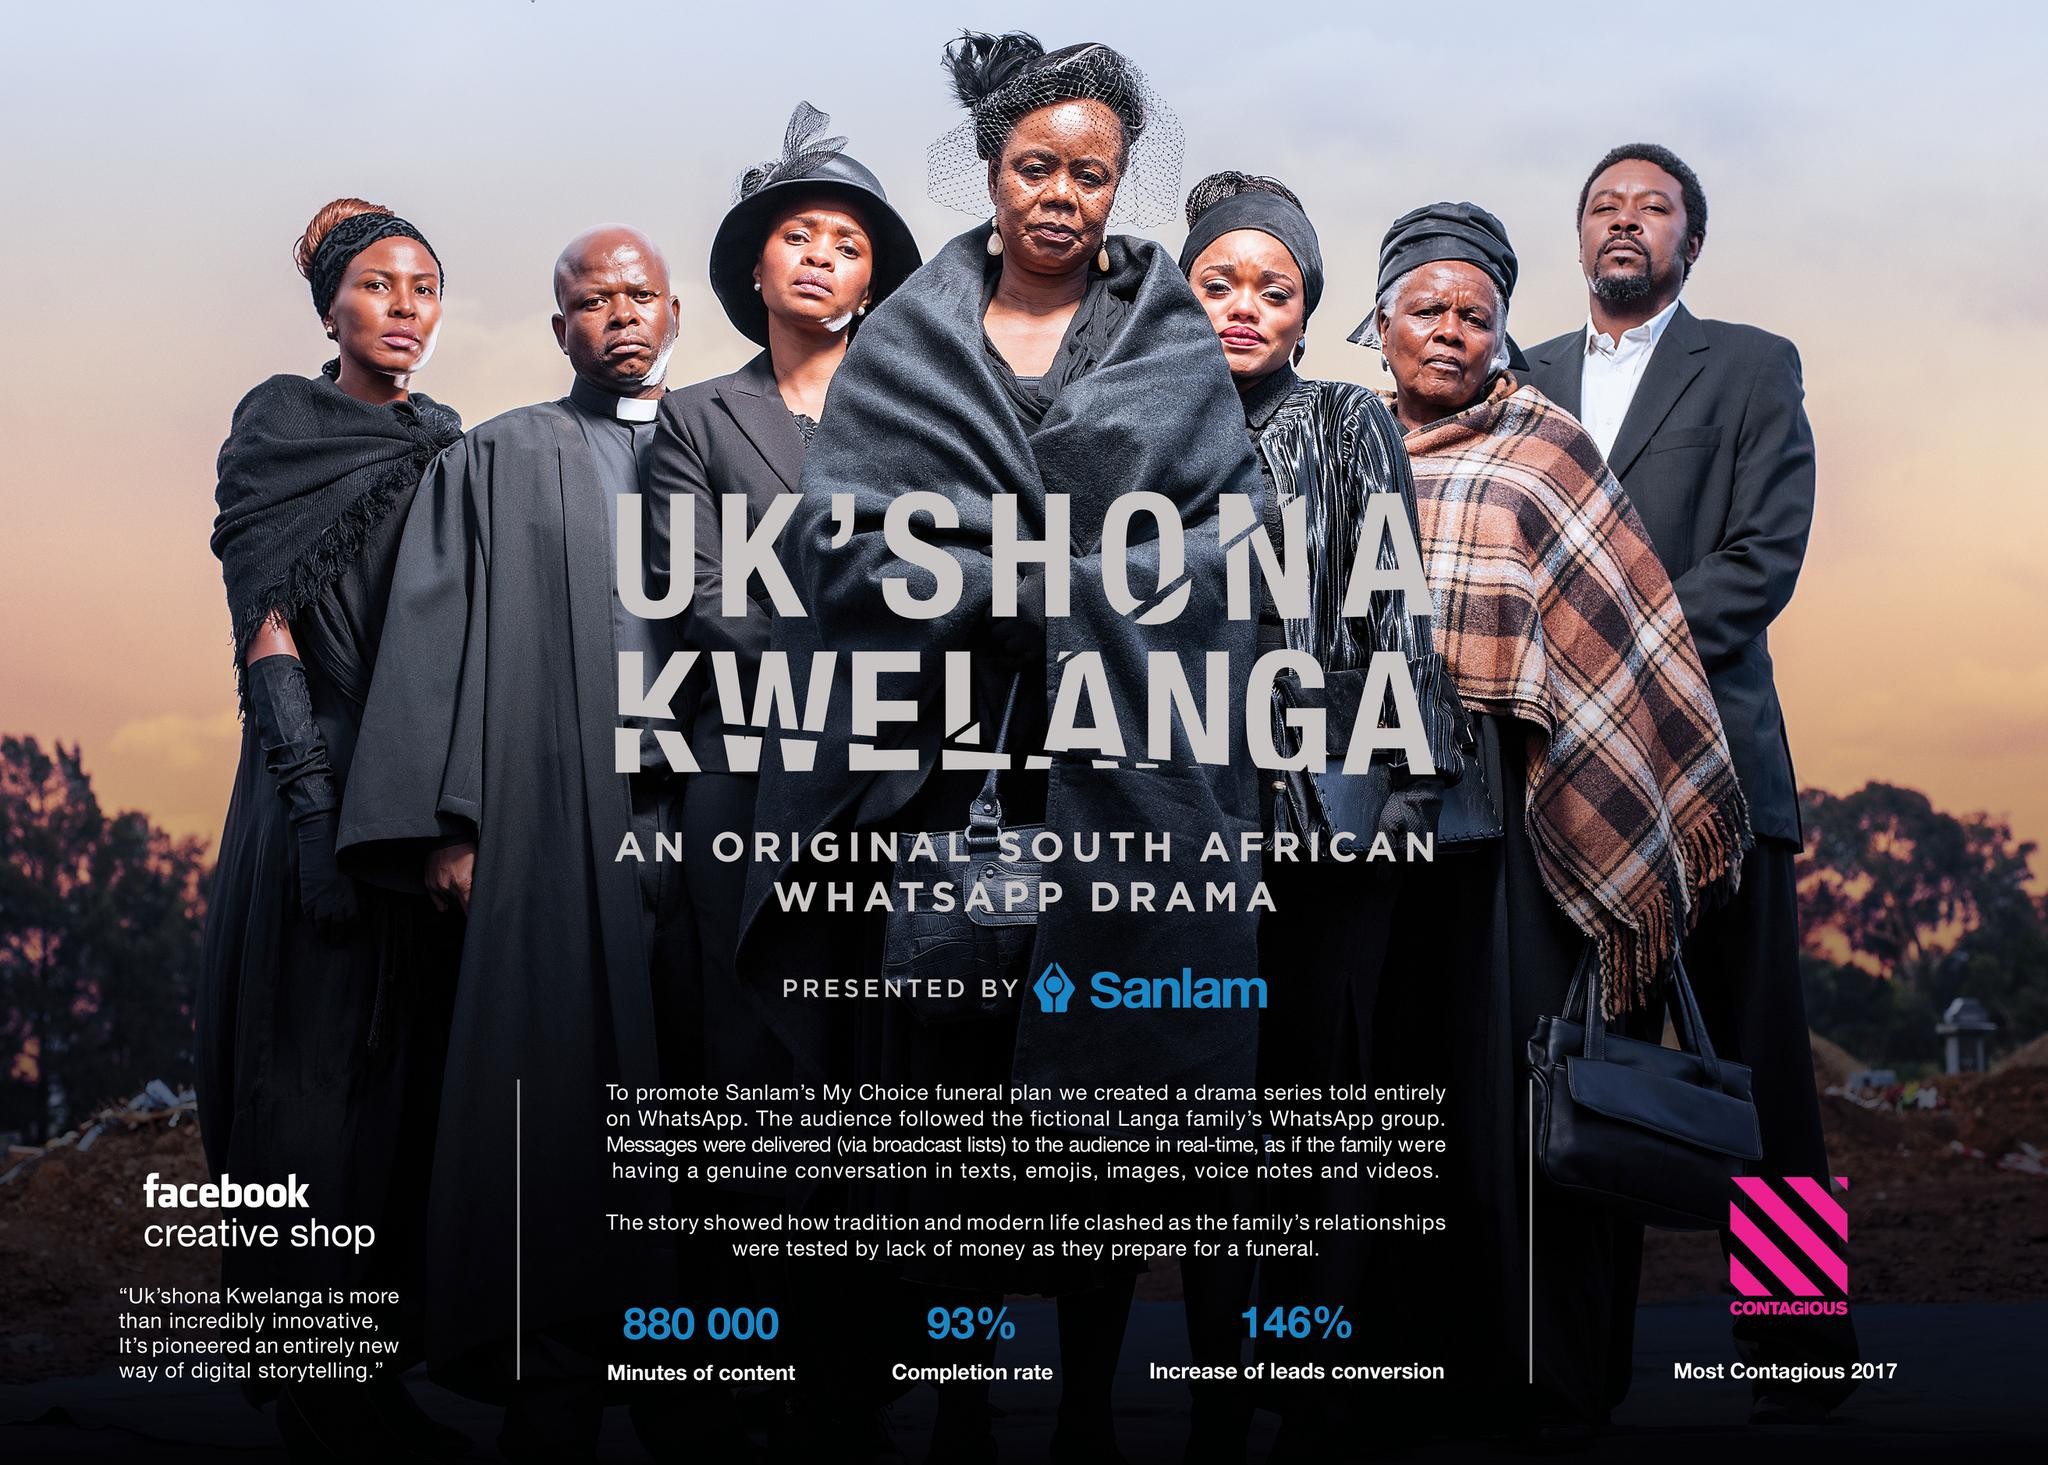 UK'SHONA KWELANGA - A WHATSAPP DRAMA SERIES